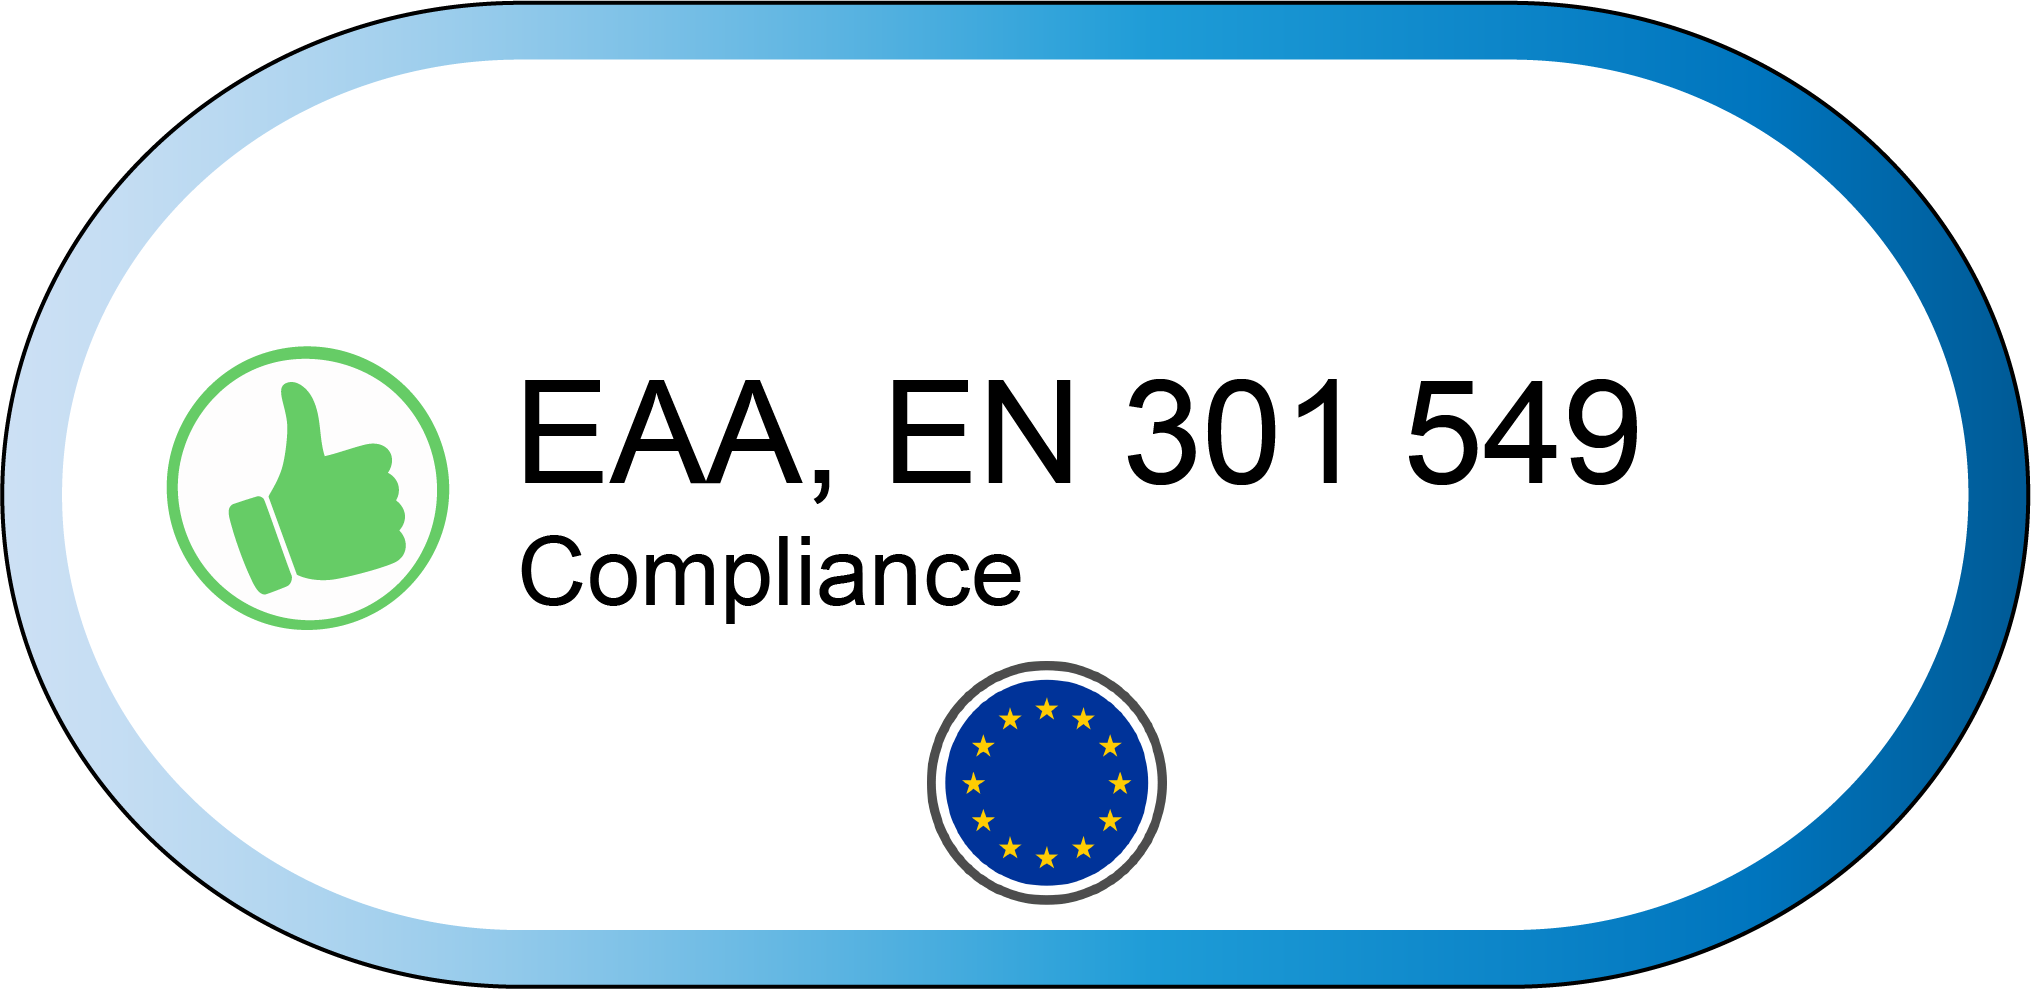 eaa, en 301 549 compliance icon